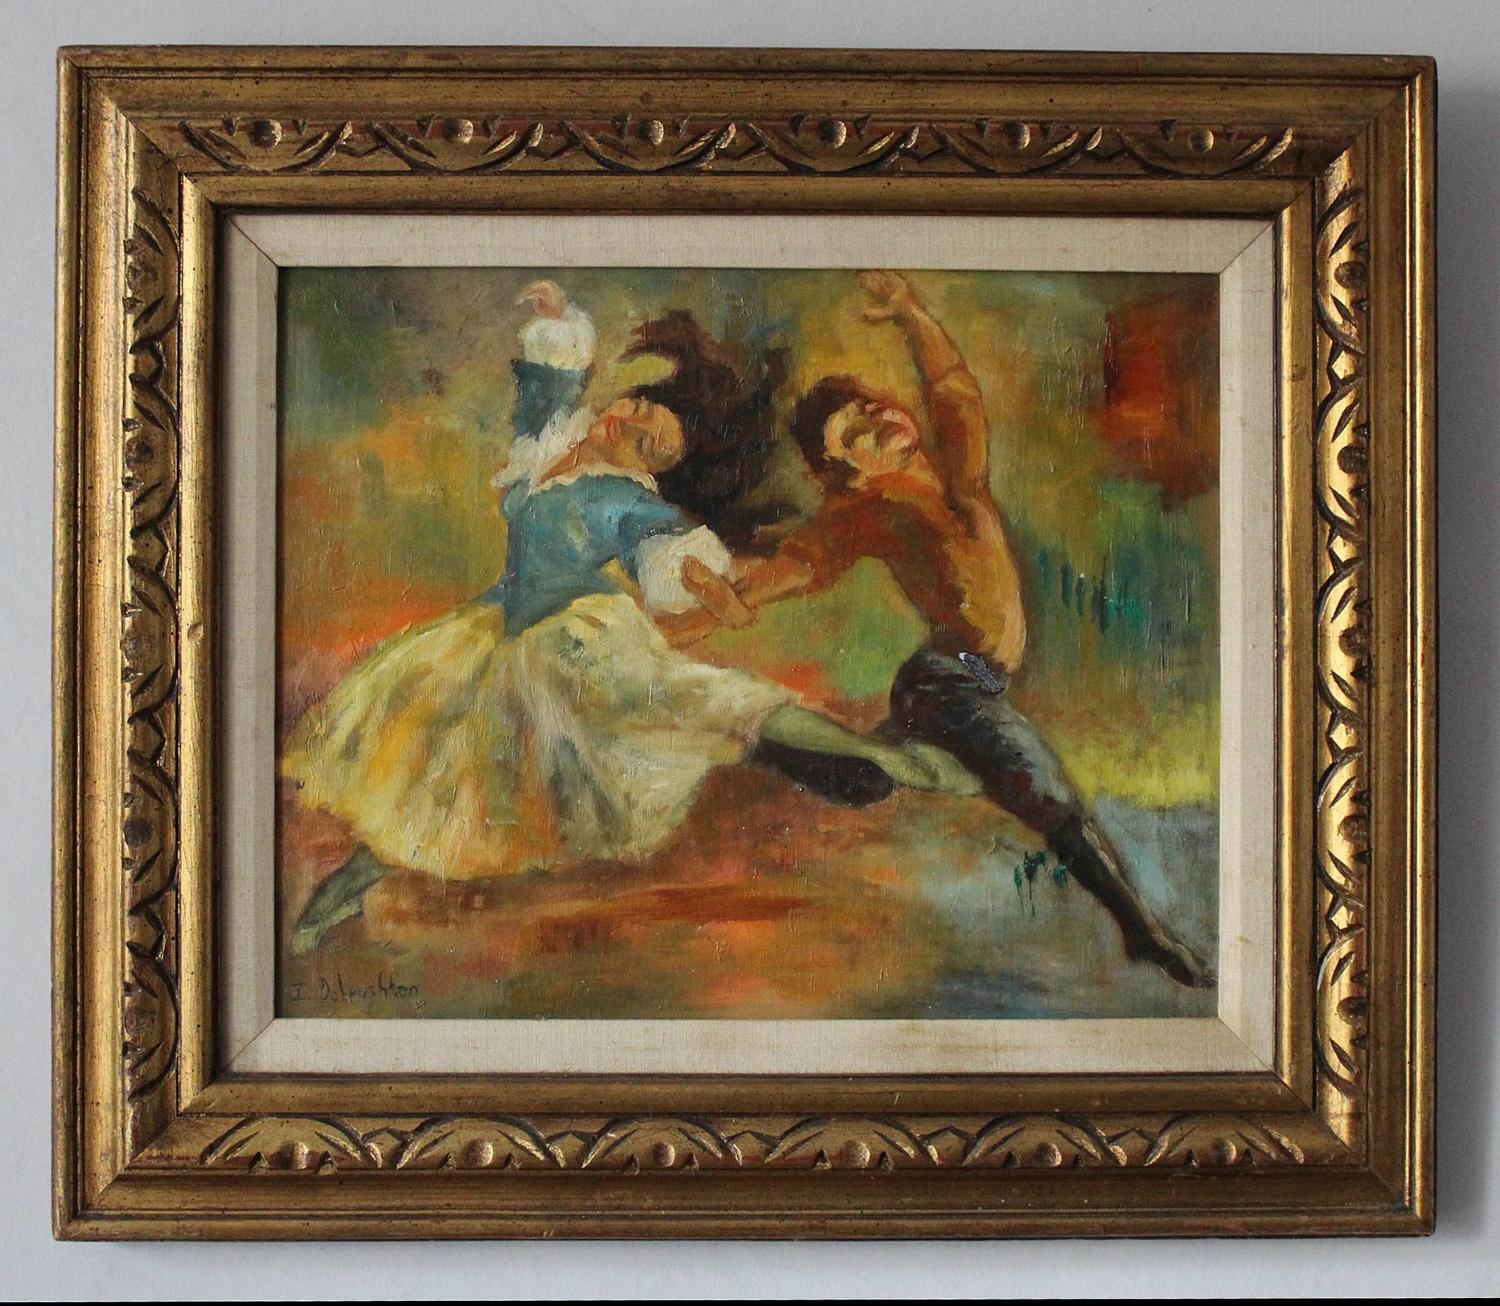 Irene Dubruschken 'The Dancers' Oil on Canvas